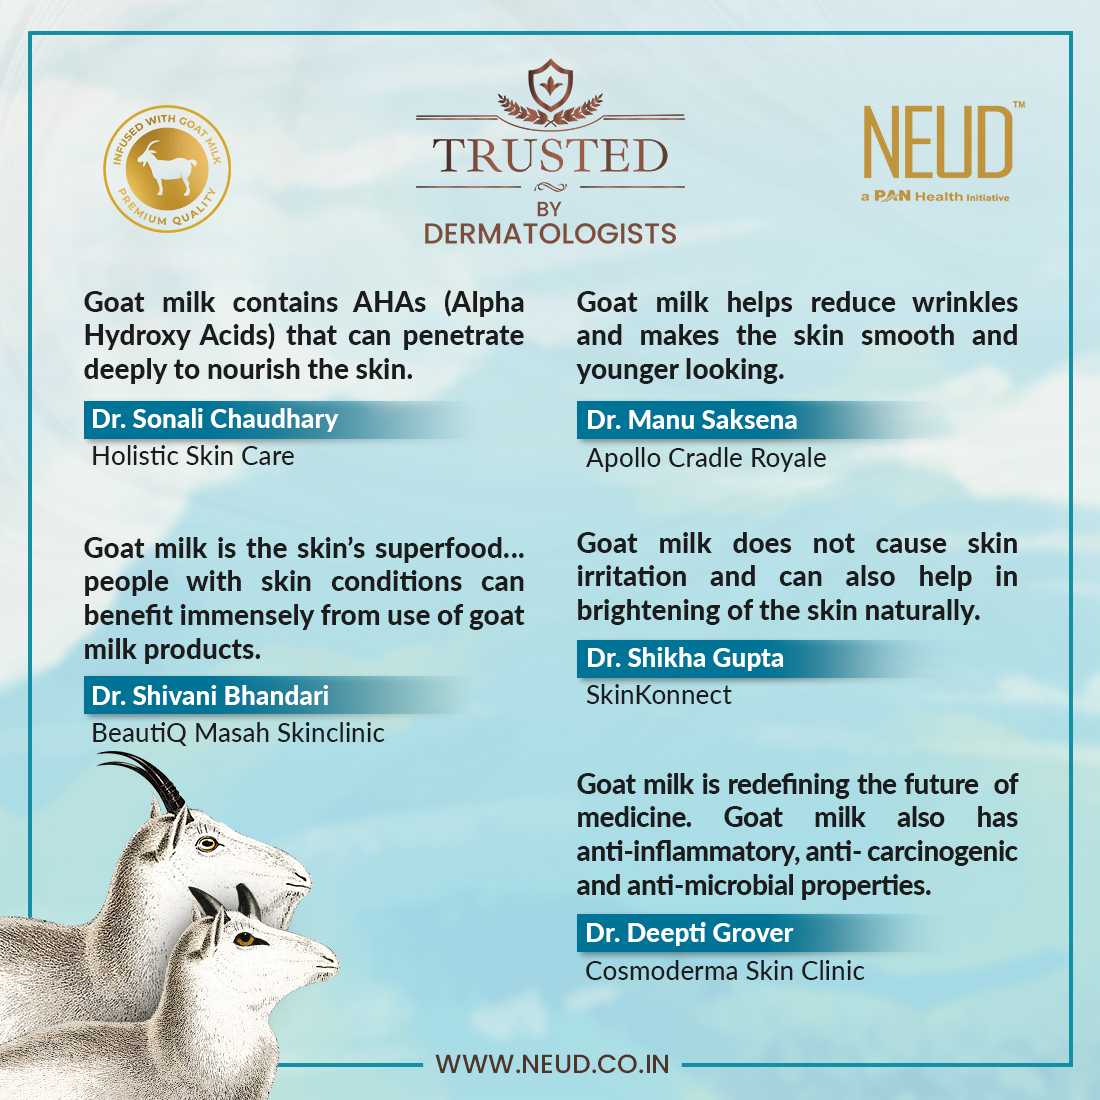 NEUD Goat Milk Premium Personal Care Kit for Men & Women (25ml x 4 Nos.) - Get Free Zipper Pouch